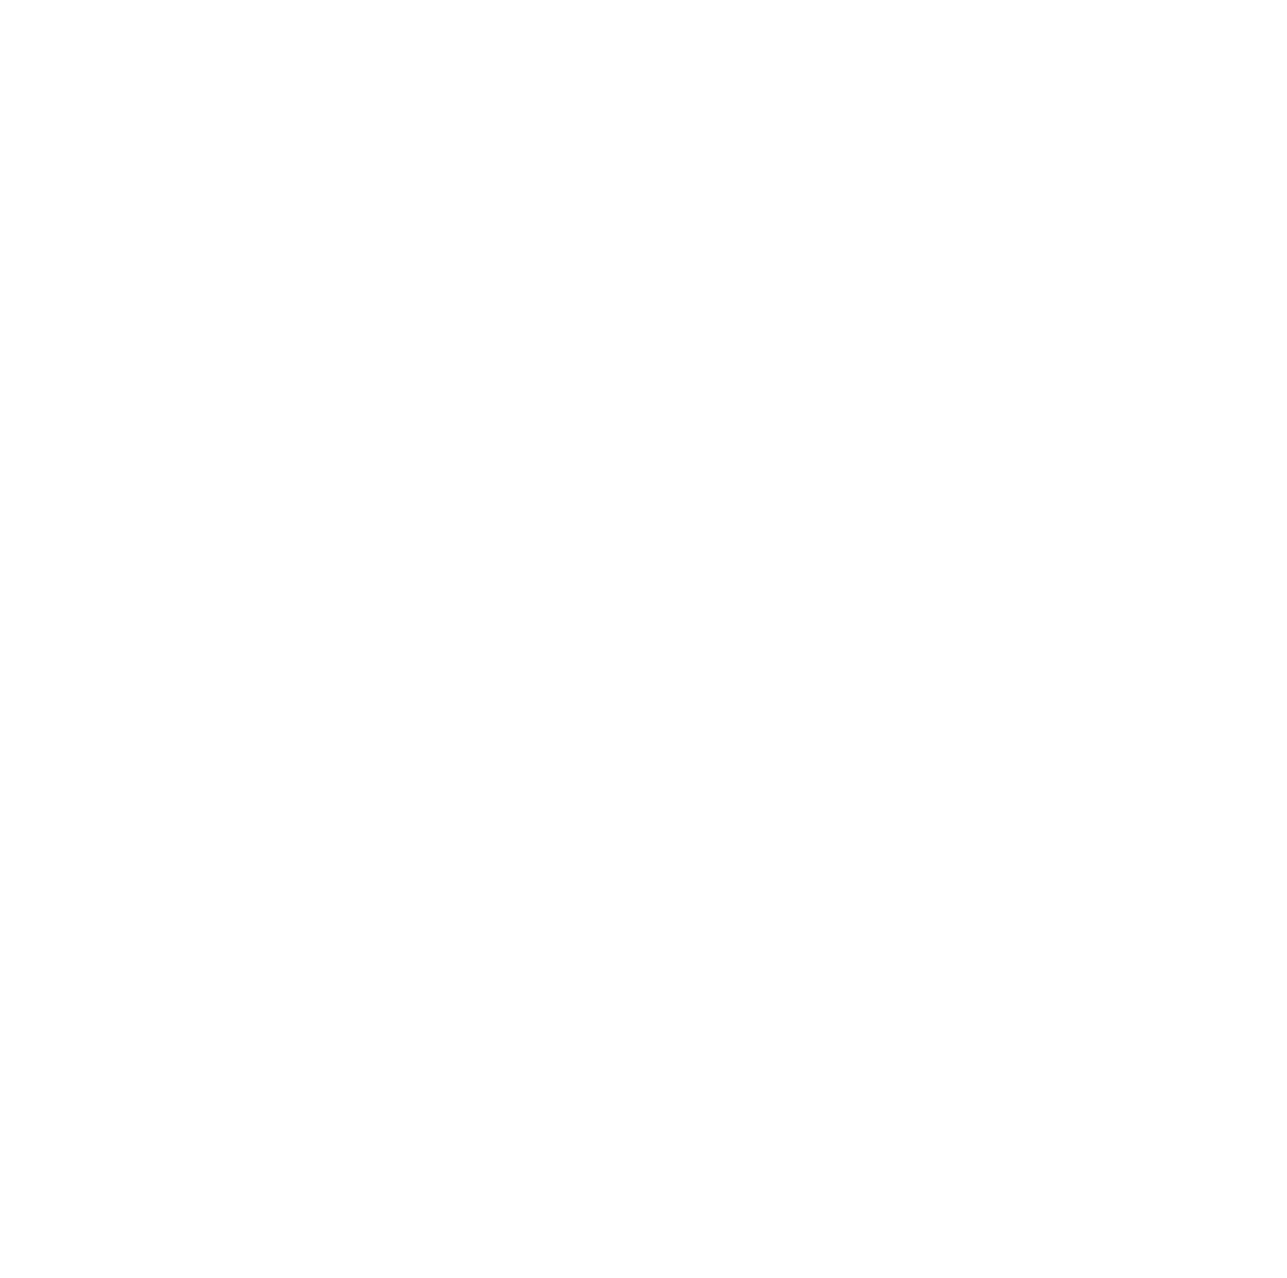 SURPASS KAMINOCHO FRONT MARKS